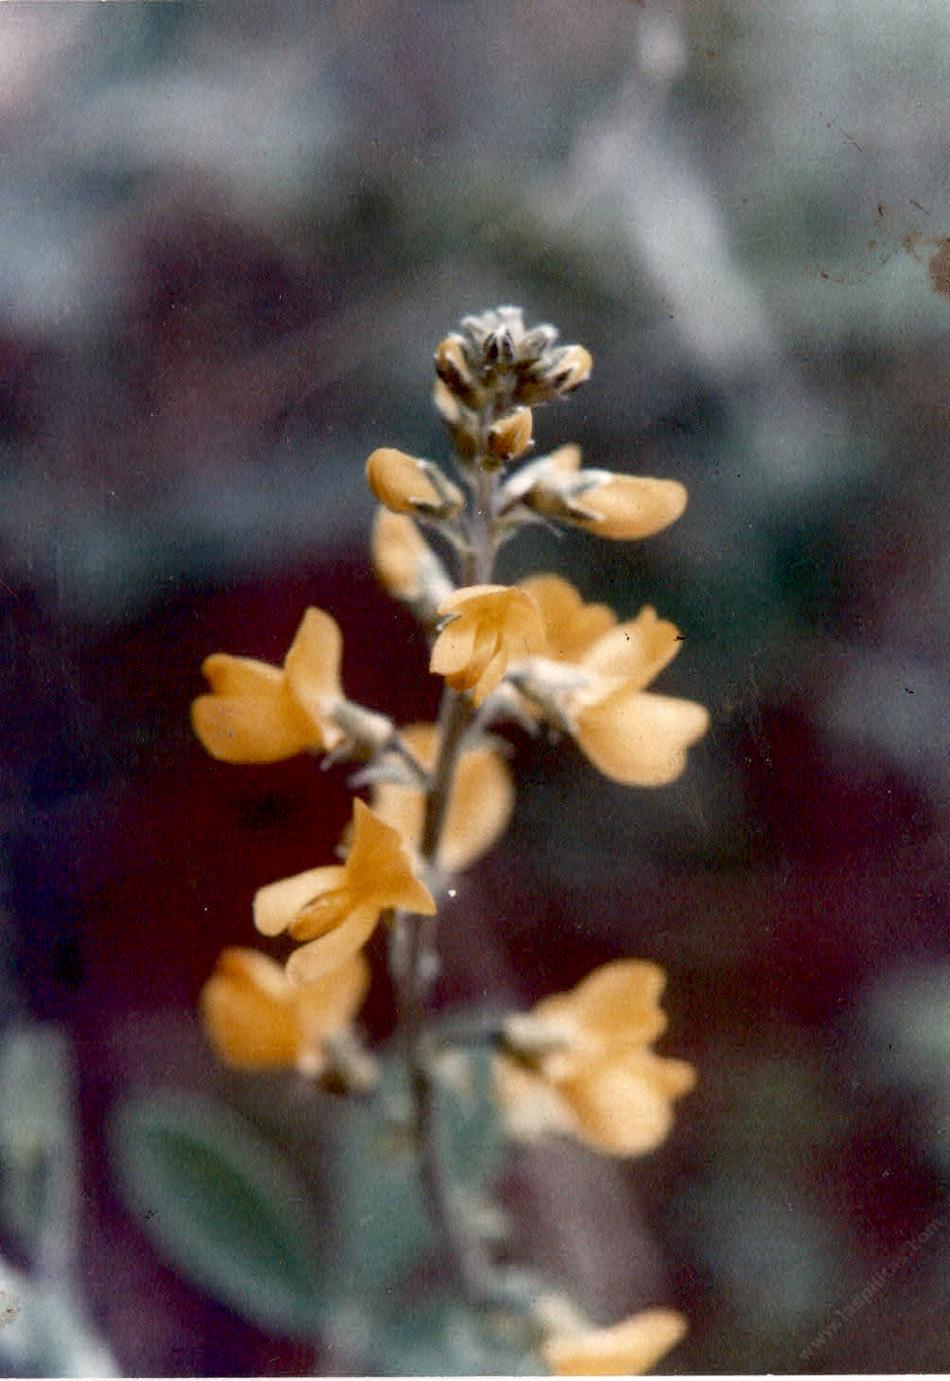 Thermopsis macrophylla macrophylla